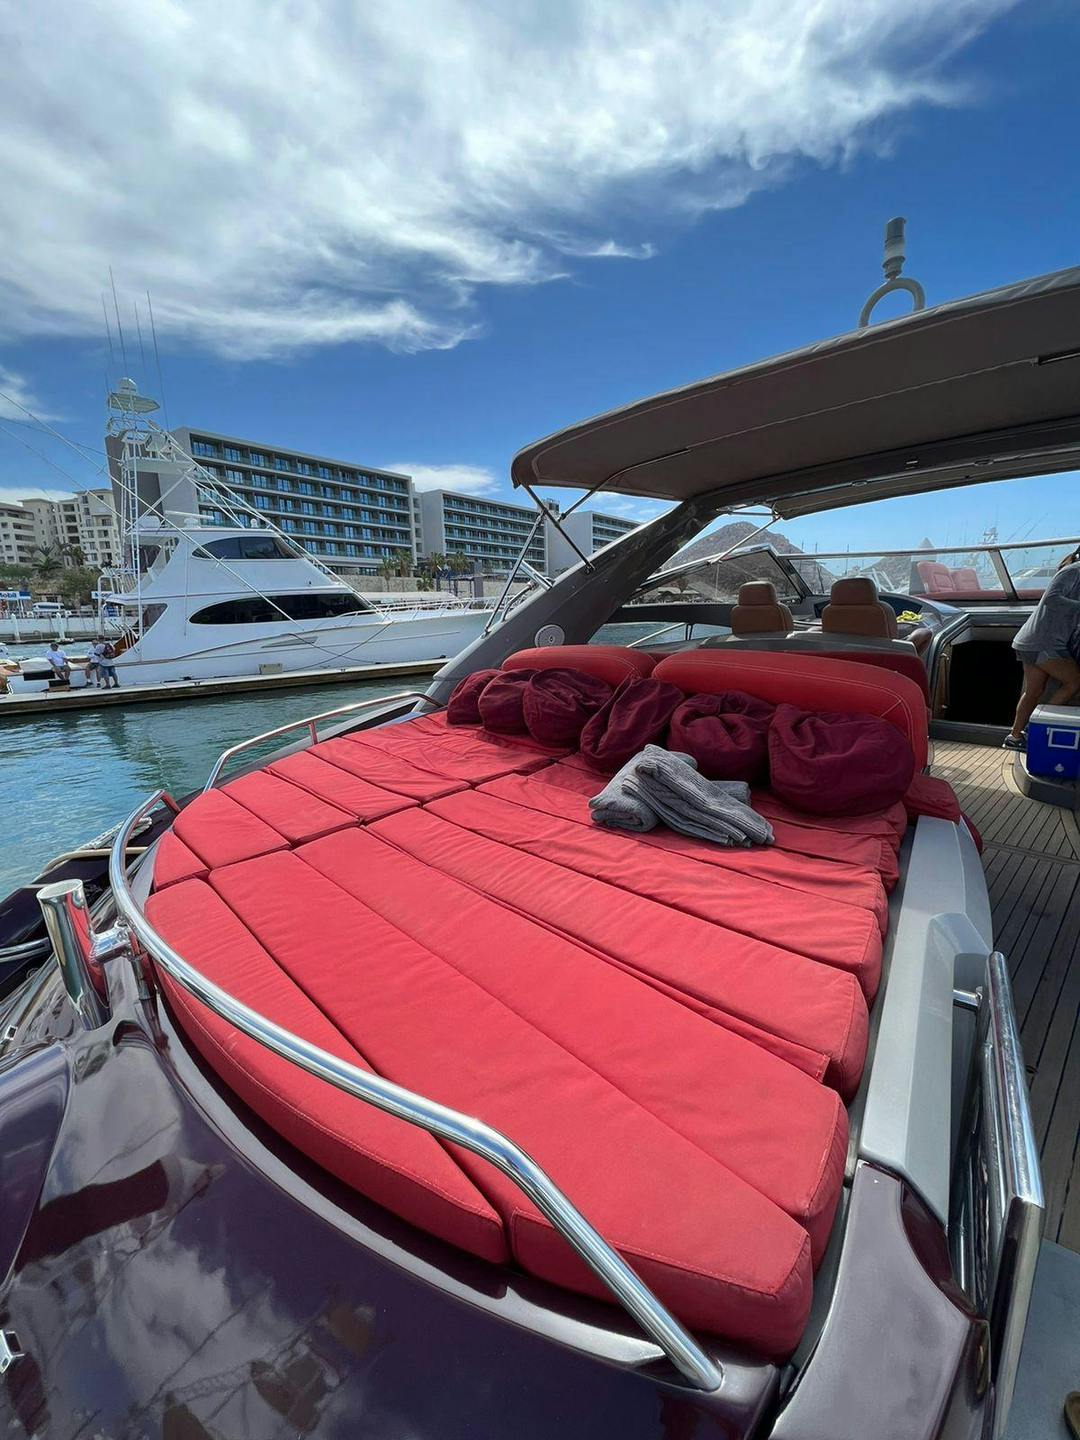 55' Sunseeker luxury charter yacht - Cabo San Lucas, BCS, Mexico - 2